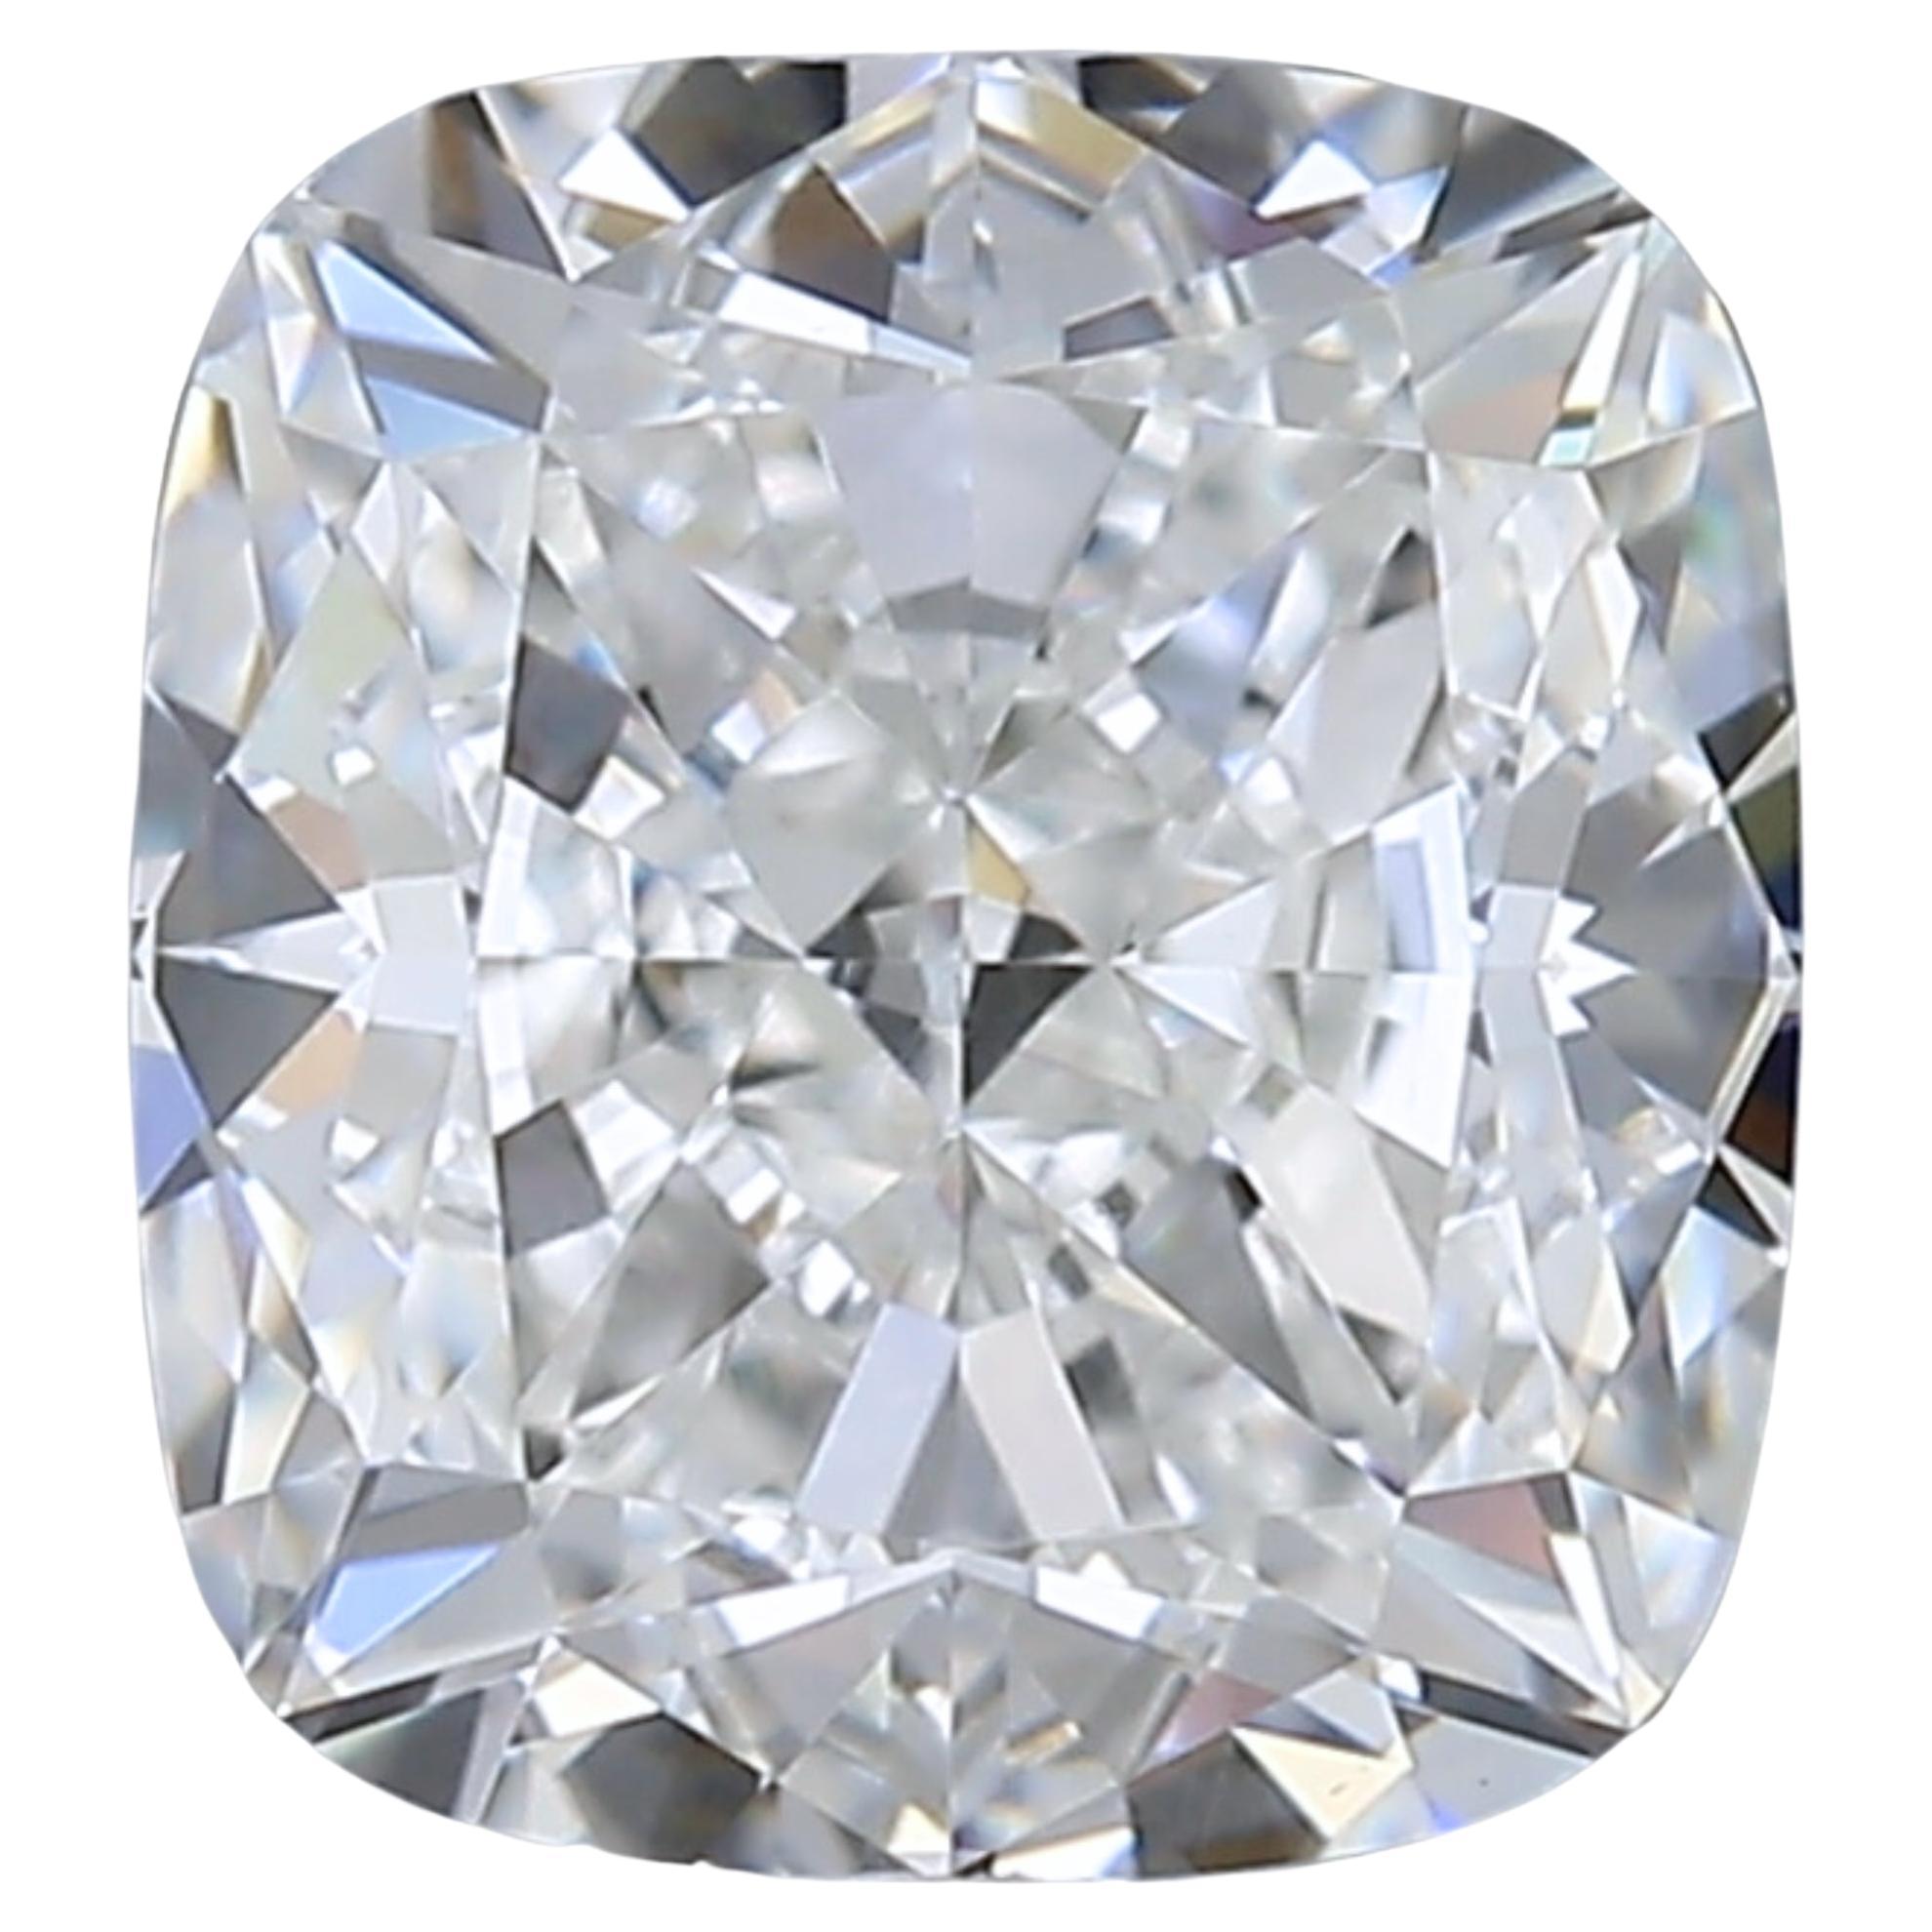 1pc Glamorous Natural cut Cushion diamond in a 1.15 carat For Sale